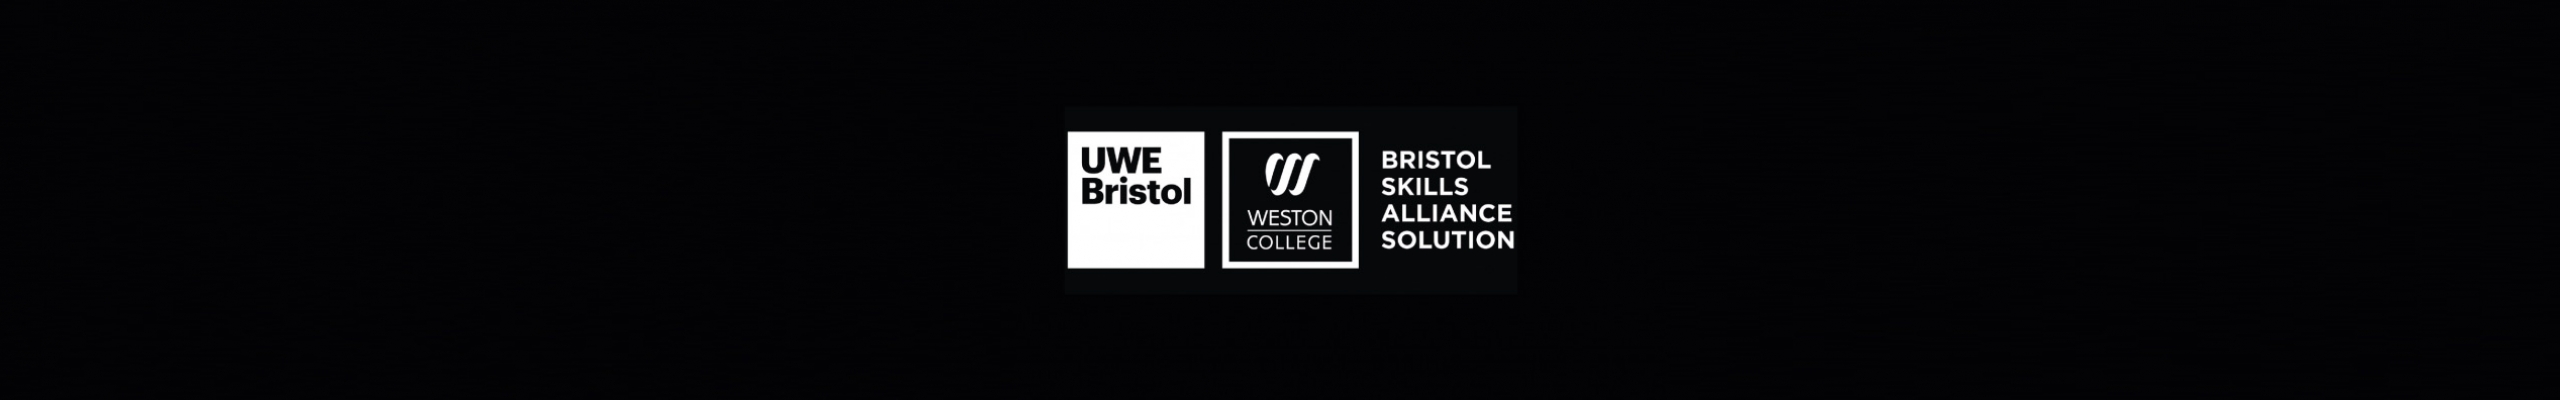 UCW Bristol Skills Alliance Solution